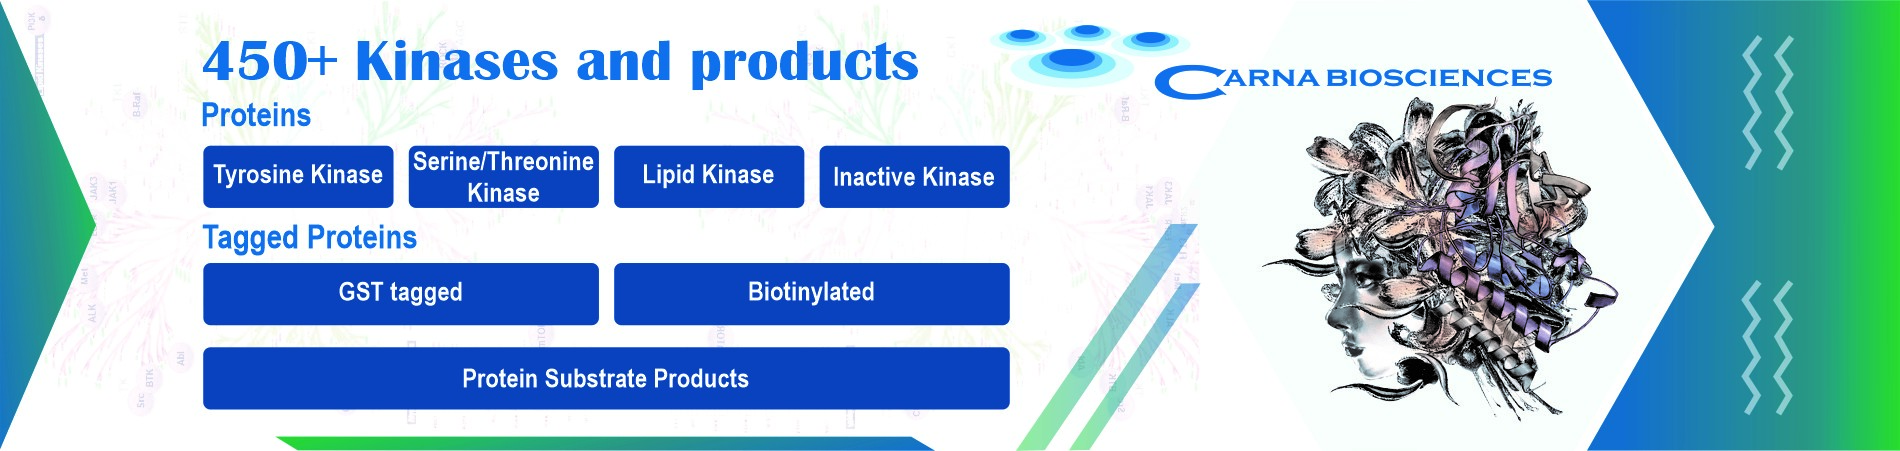 Carna Biosciences A Leading Producer of Kinases